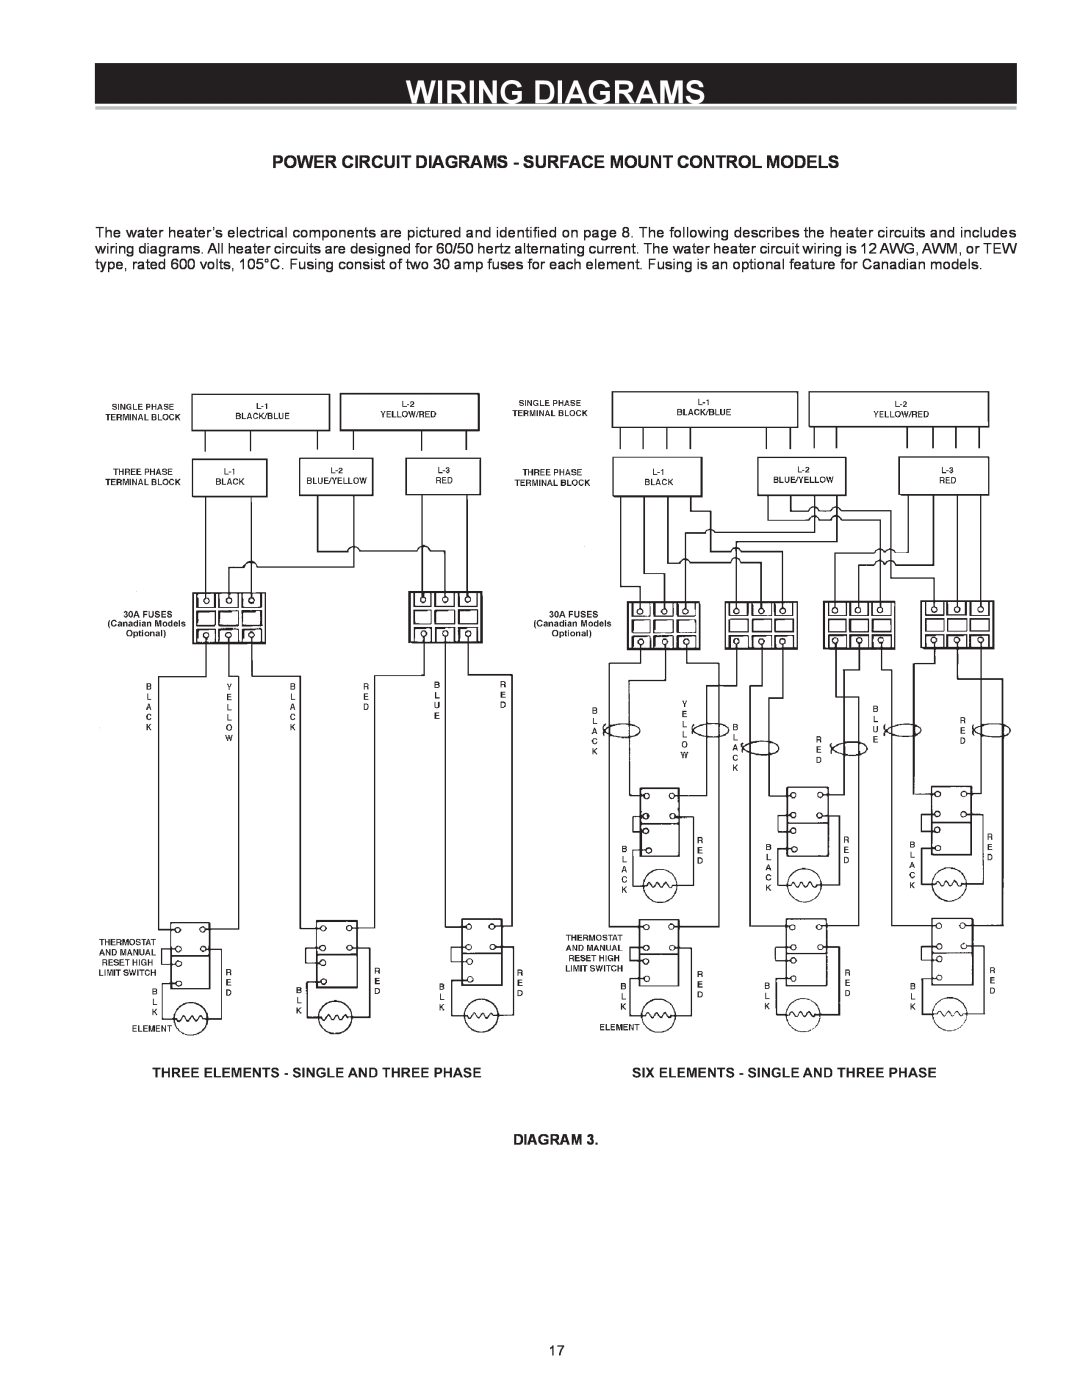 A.O. Smith Dve-52/80/120 instruction manual Power Circuit Diagrams - Surface Mount Control Models, Wiring Diagrams 